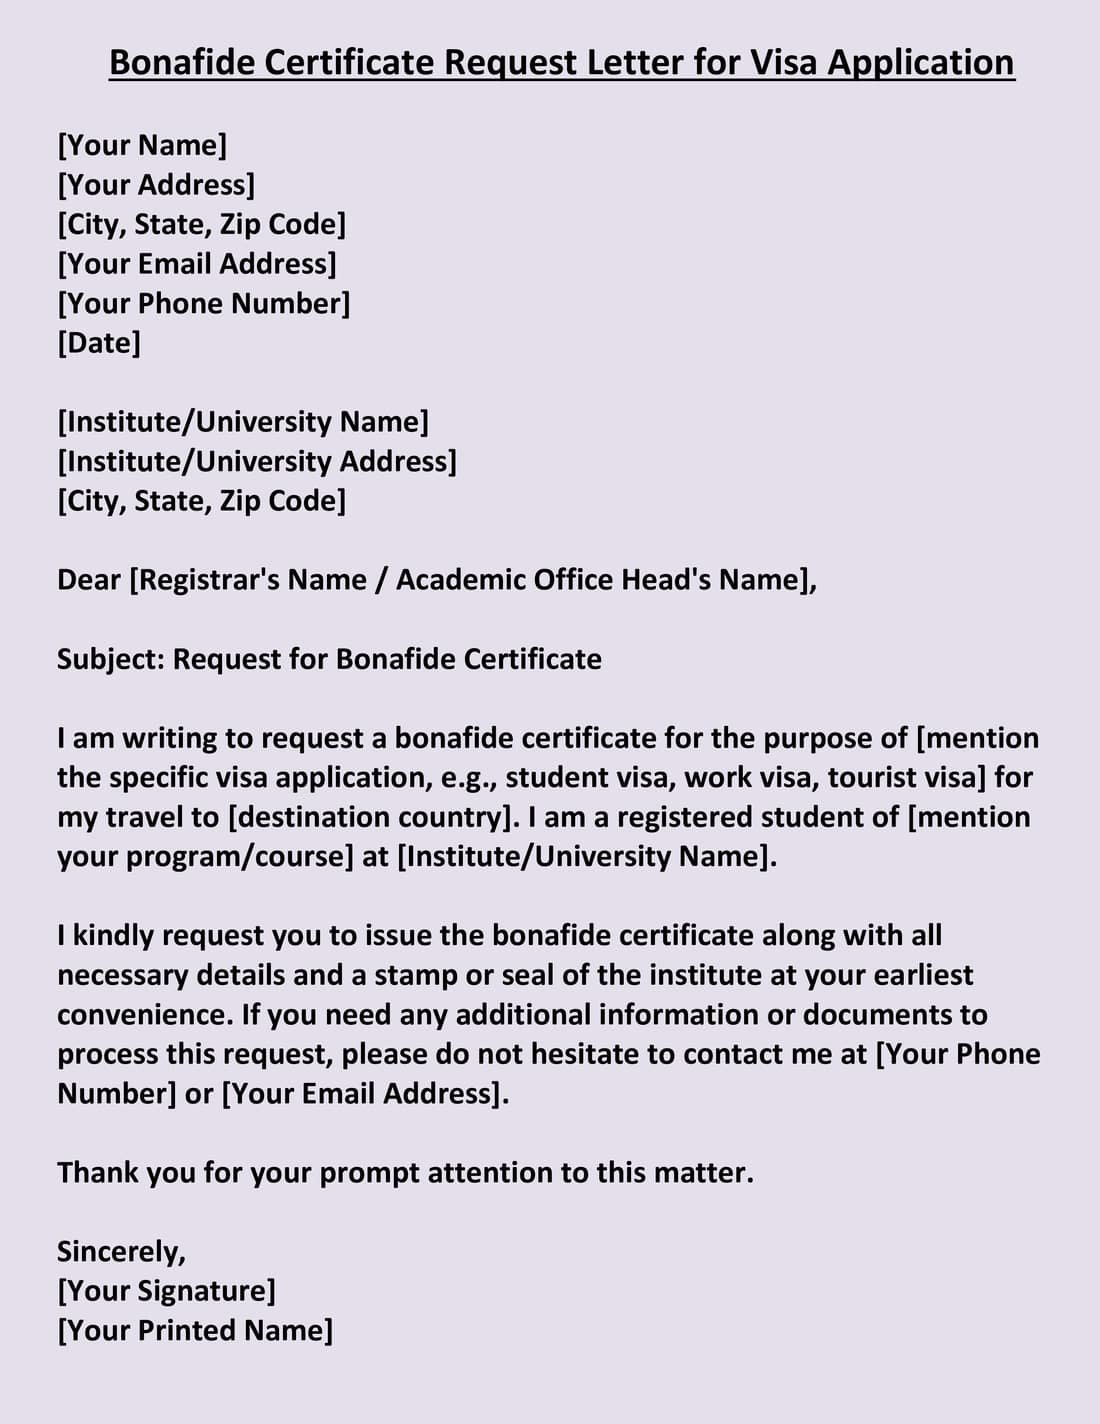 Bonafide Certificate Request Letter for Visa Application